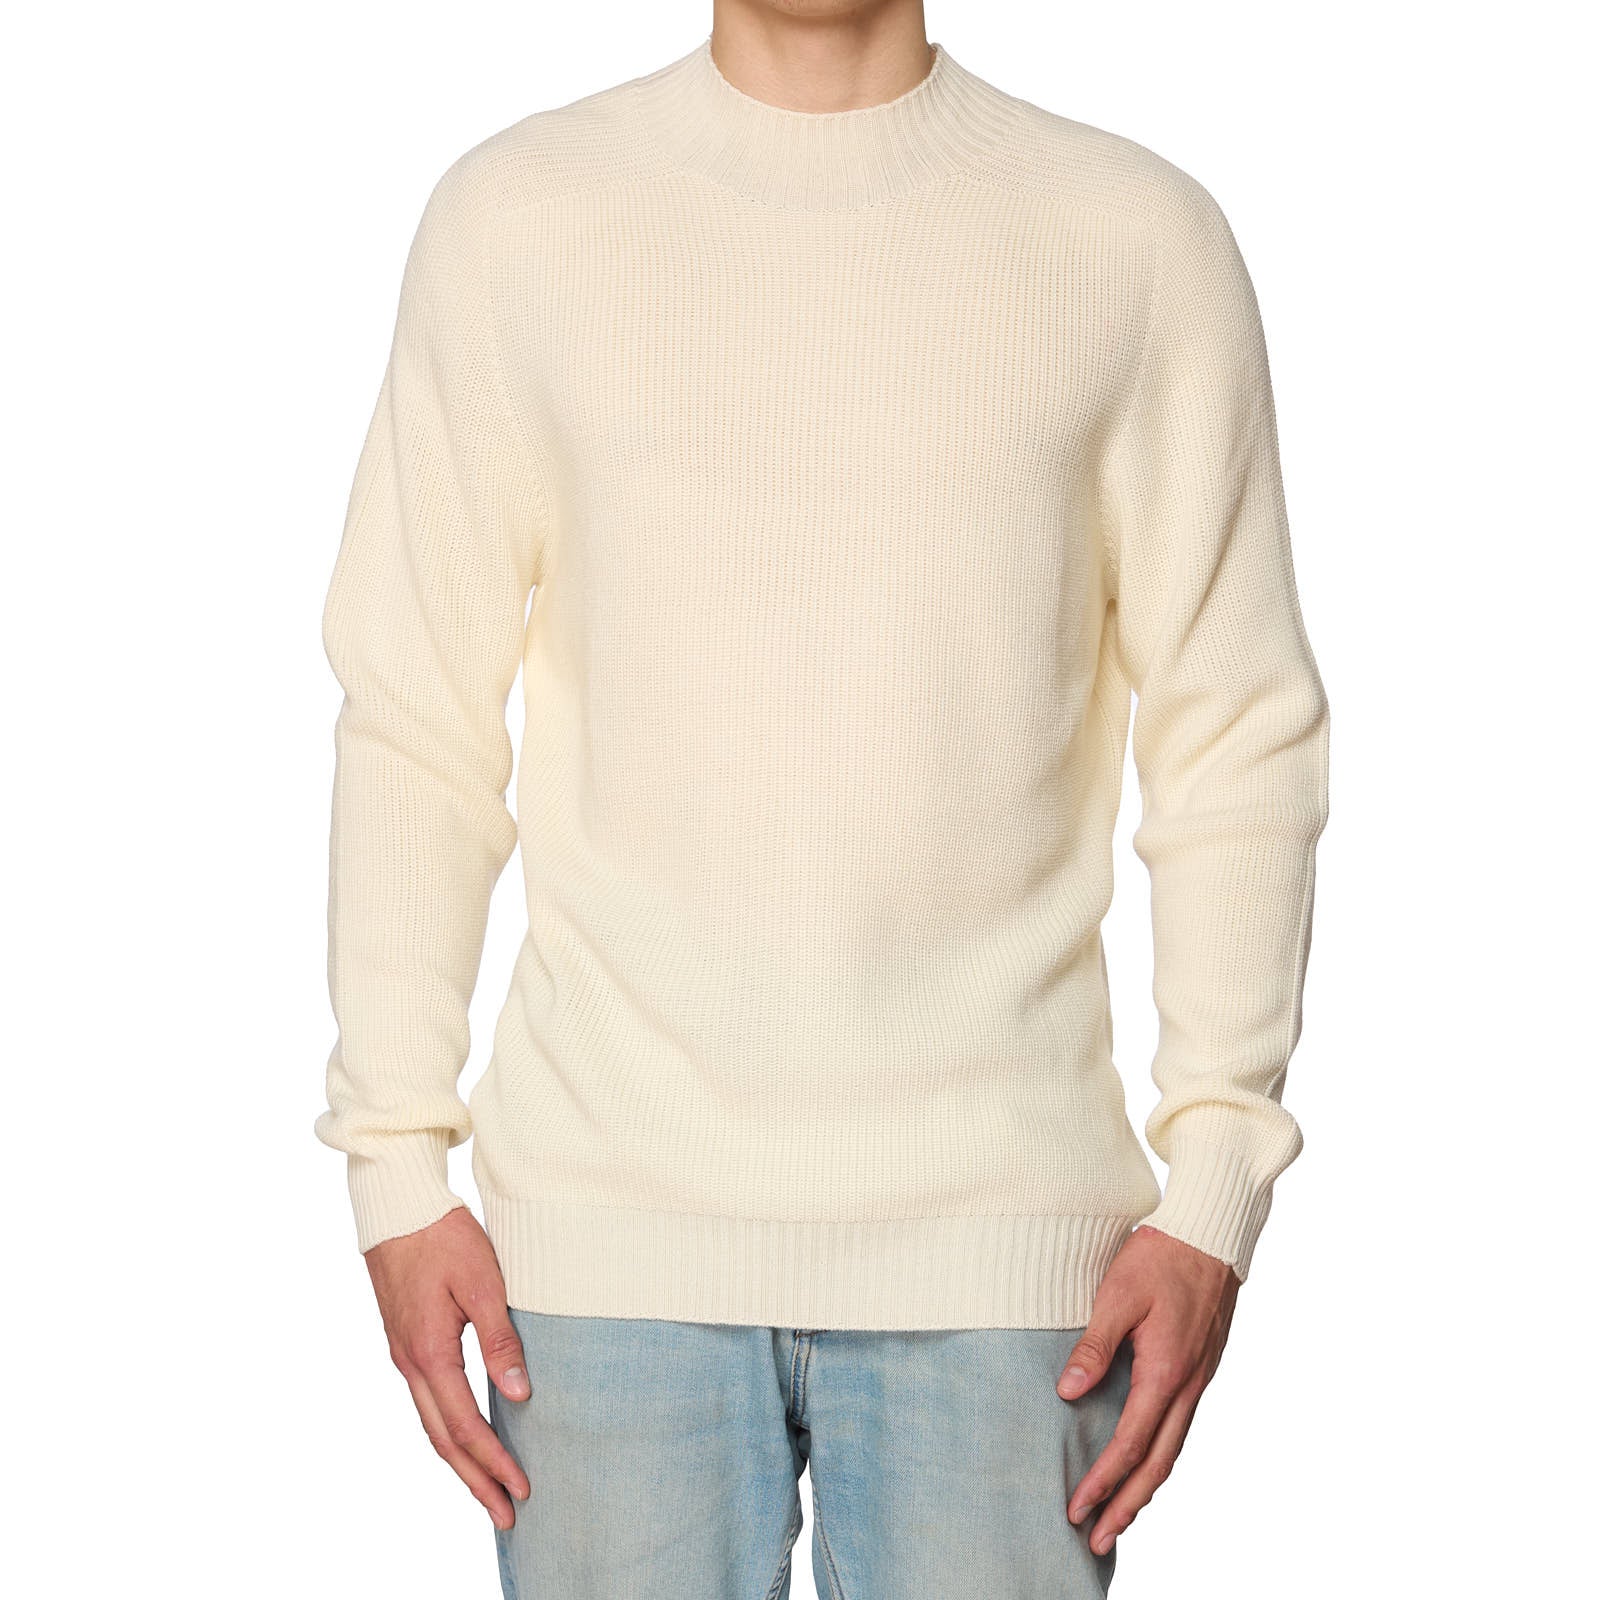 GRAN SASSO for VANNUCCI Cream Virgin Wool Knit Sweater EU 56 NEW US XL